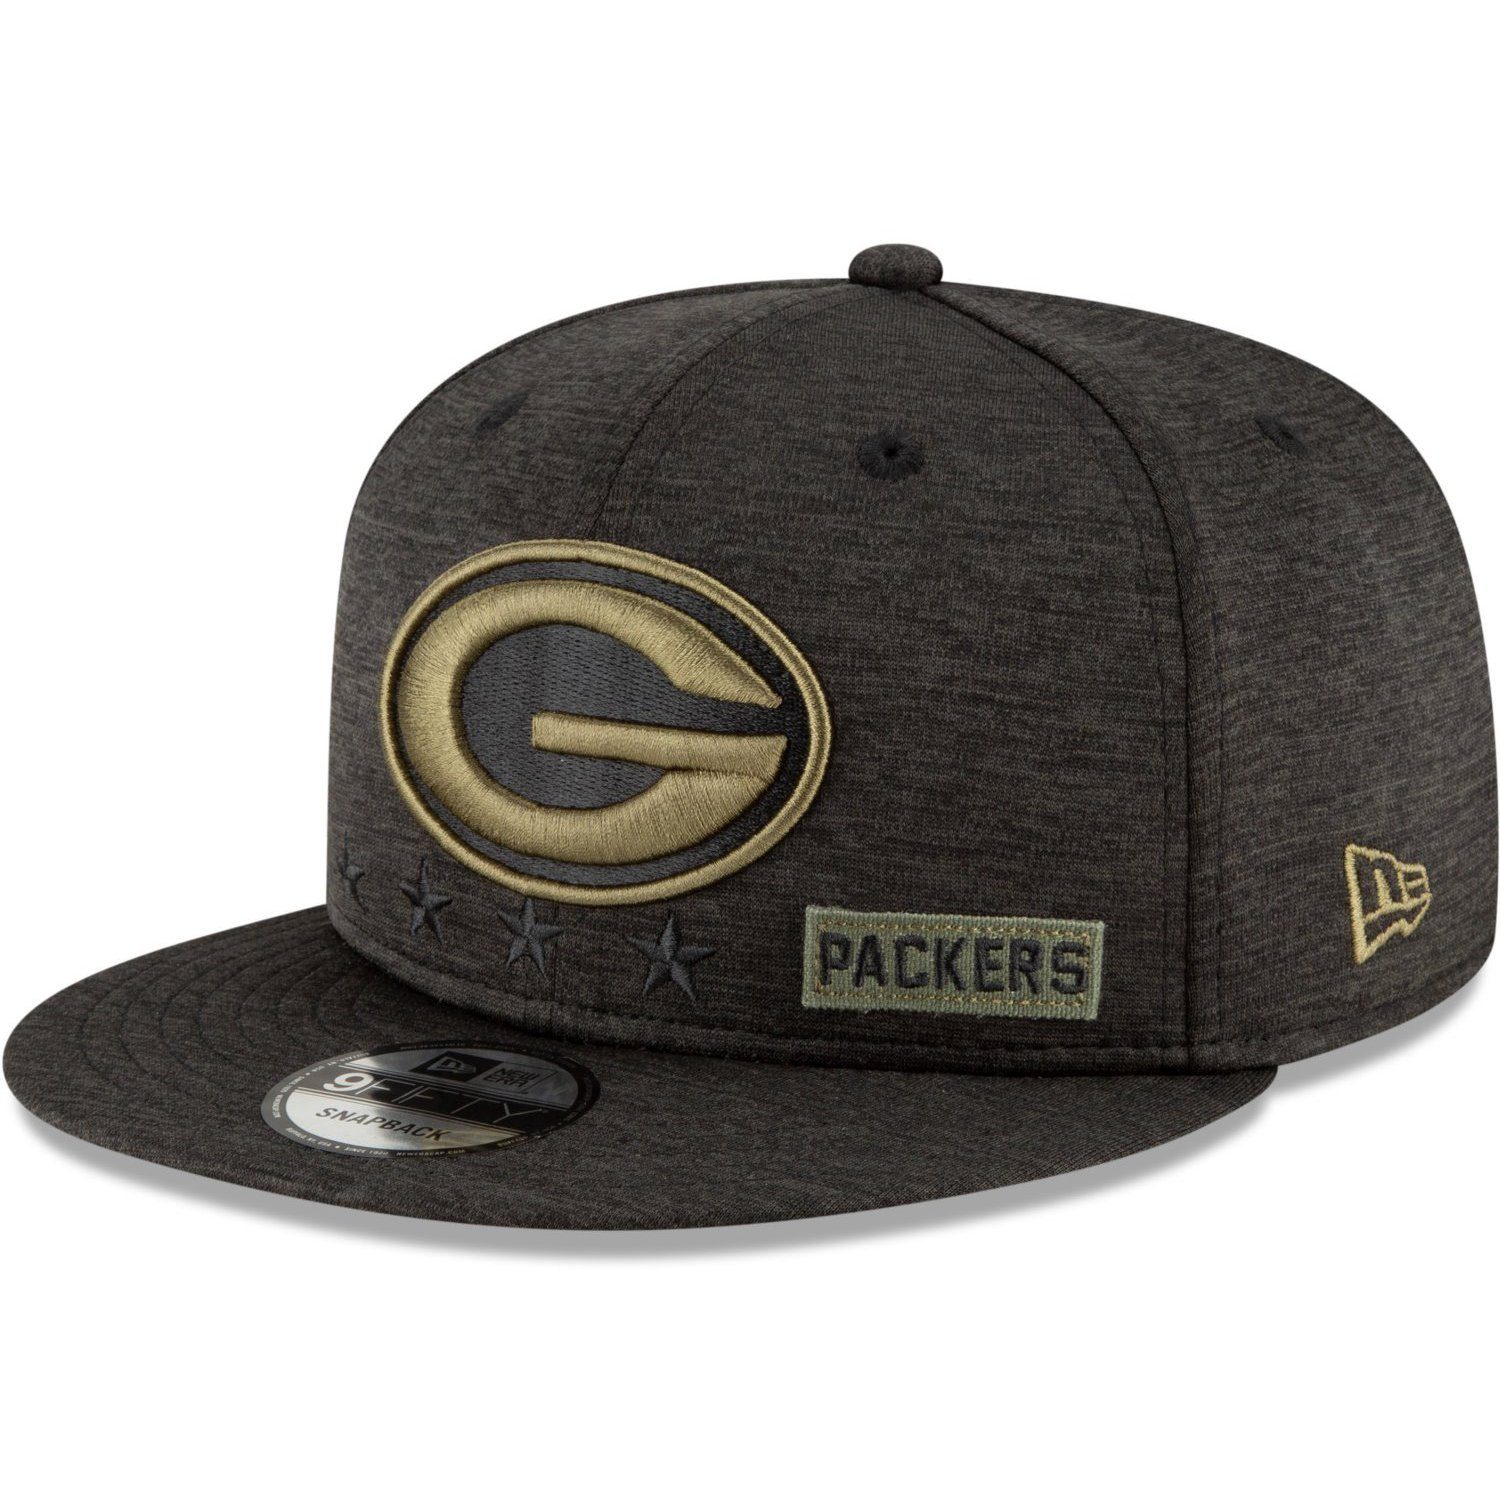 New Era Snapback Cap 9FIFTY San Francisco Packers NFL 2020 to Service Salute Green Bay